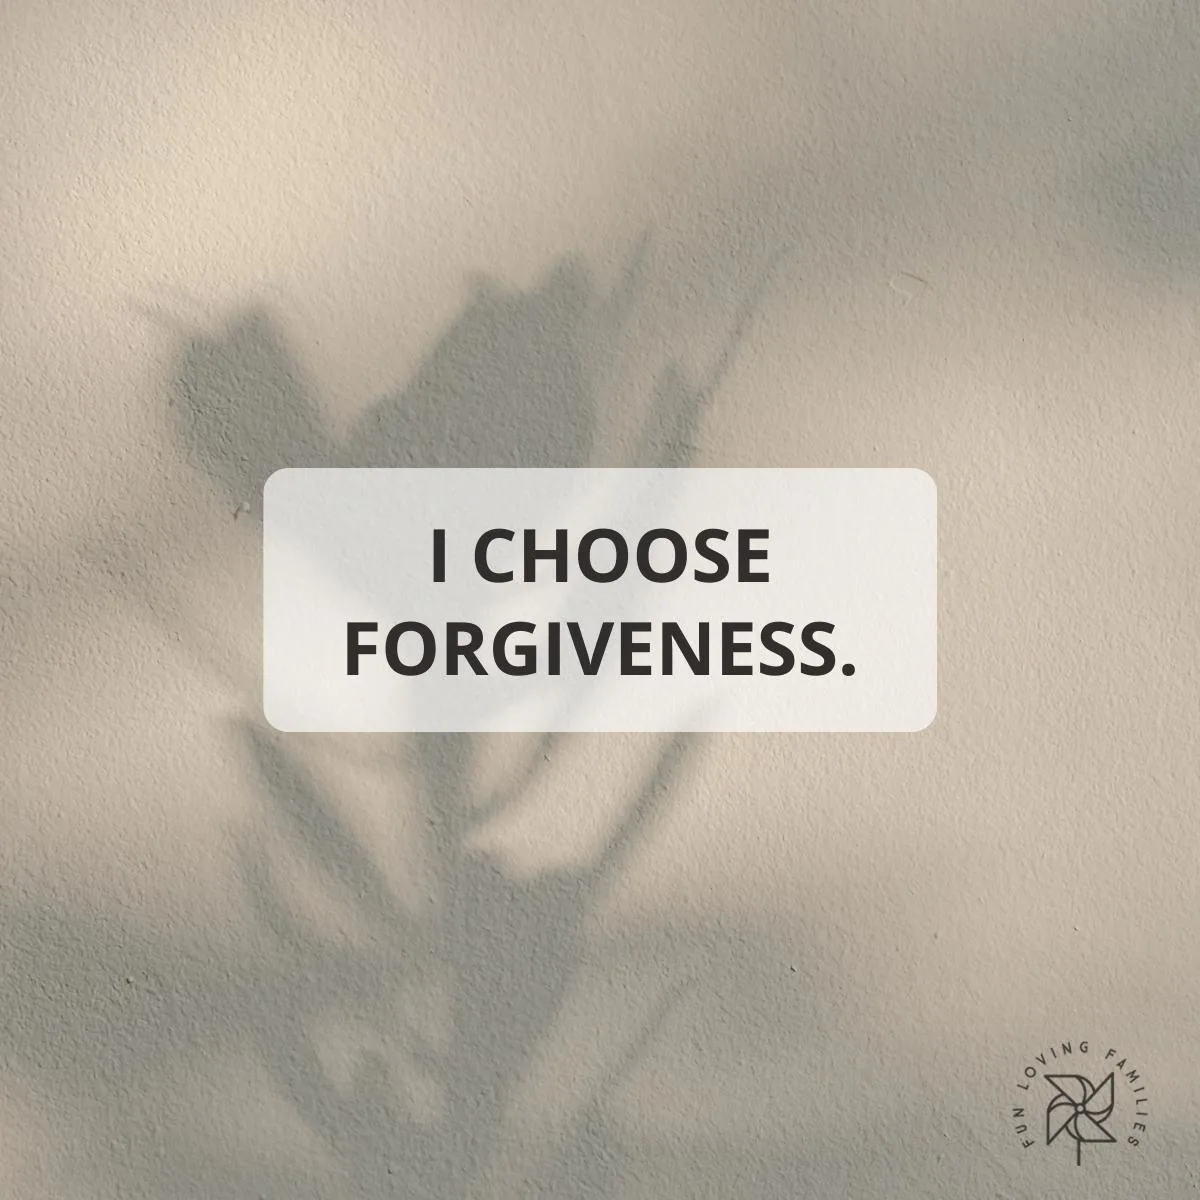 I choose forgiveness affirmation image